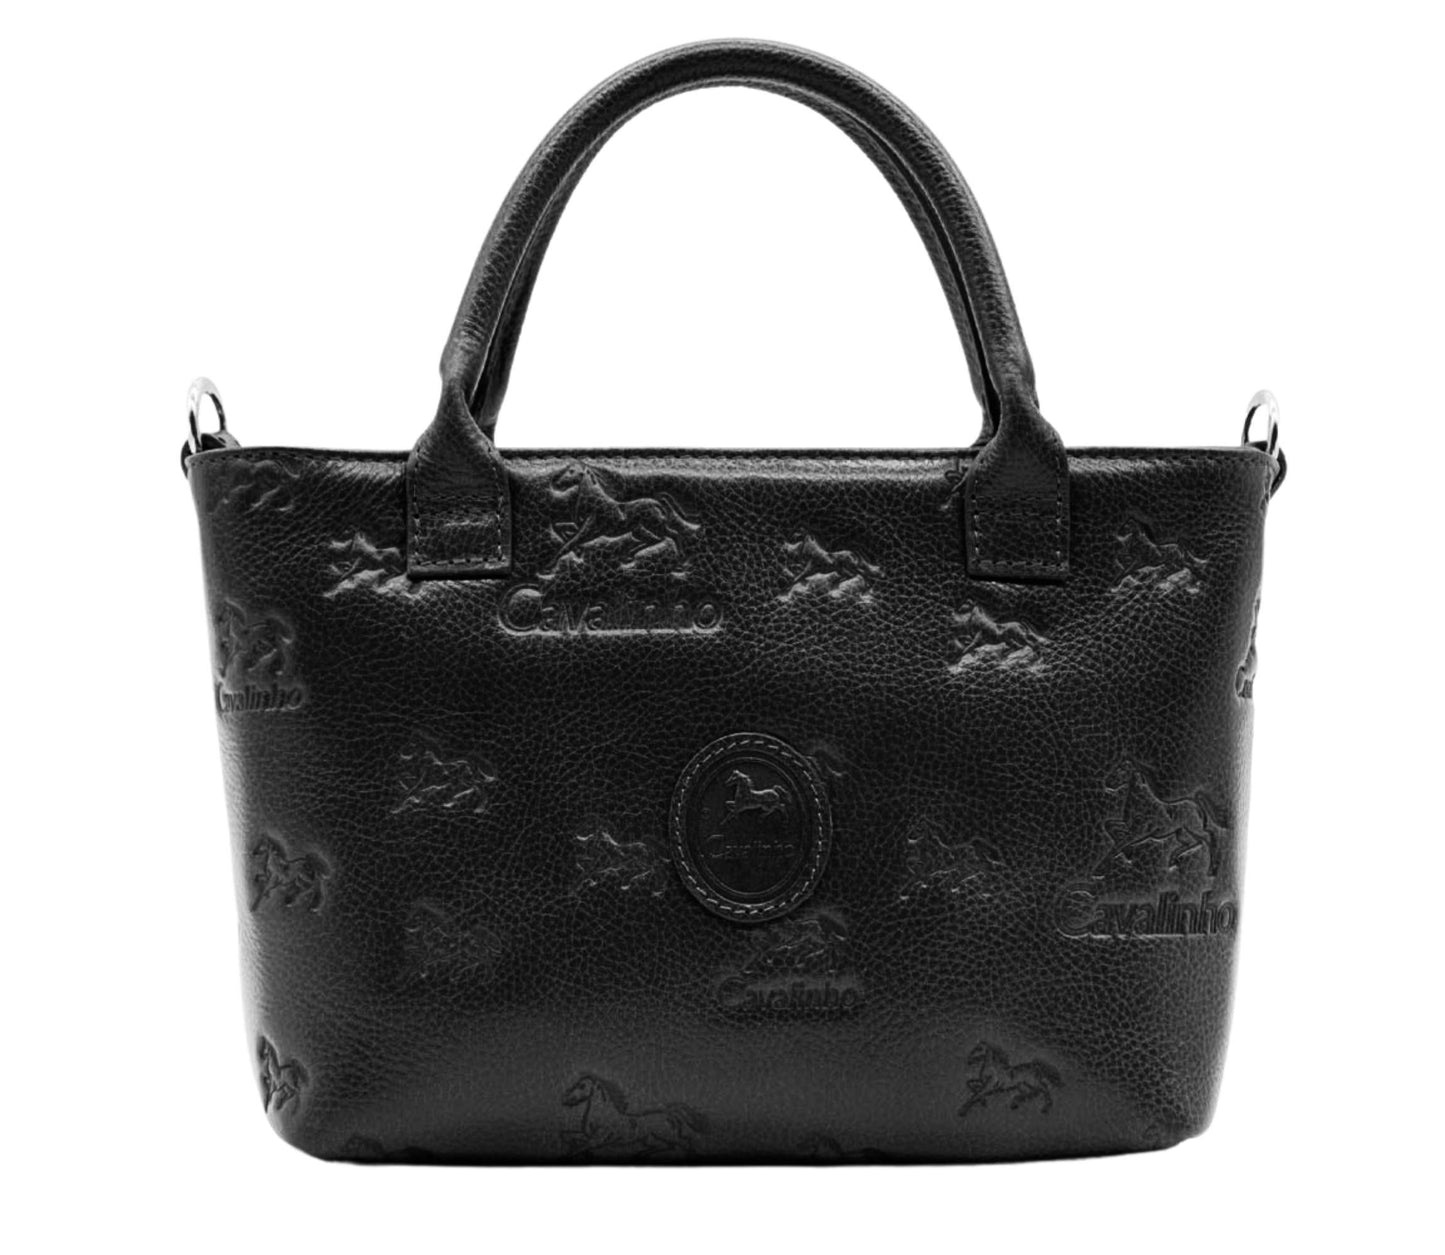 Cavalinho Cavalo Lusitano Mini Leather Handbag - Black - 18090243.01.99_57007725-33d8-49a9-8bca-96fd3e8a6f84